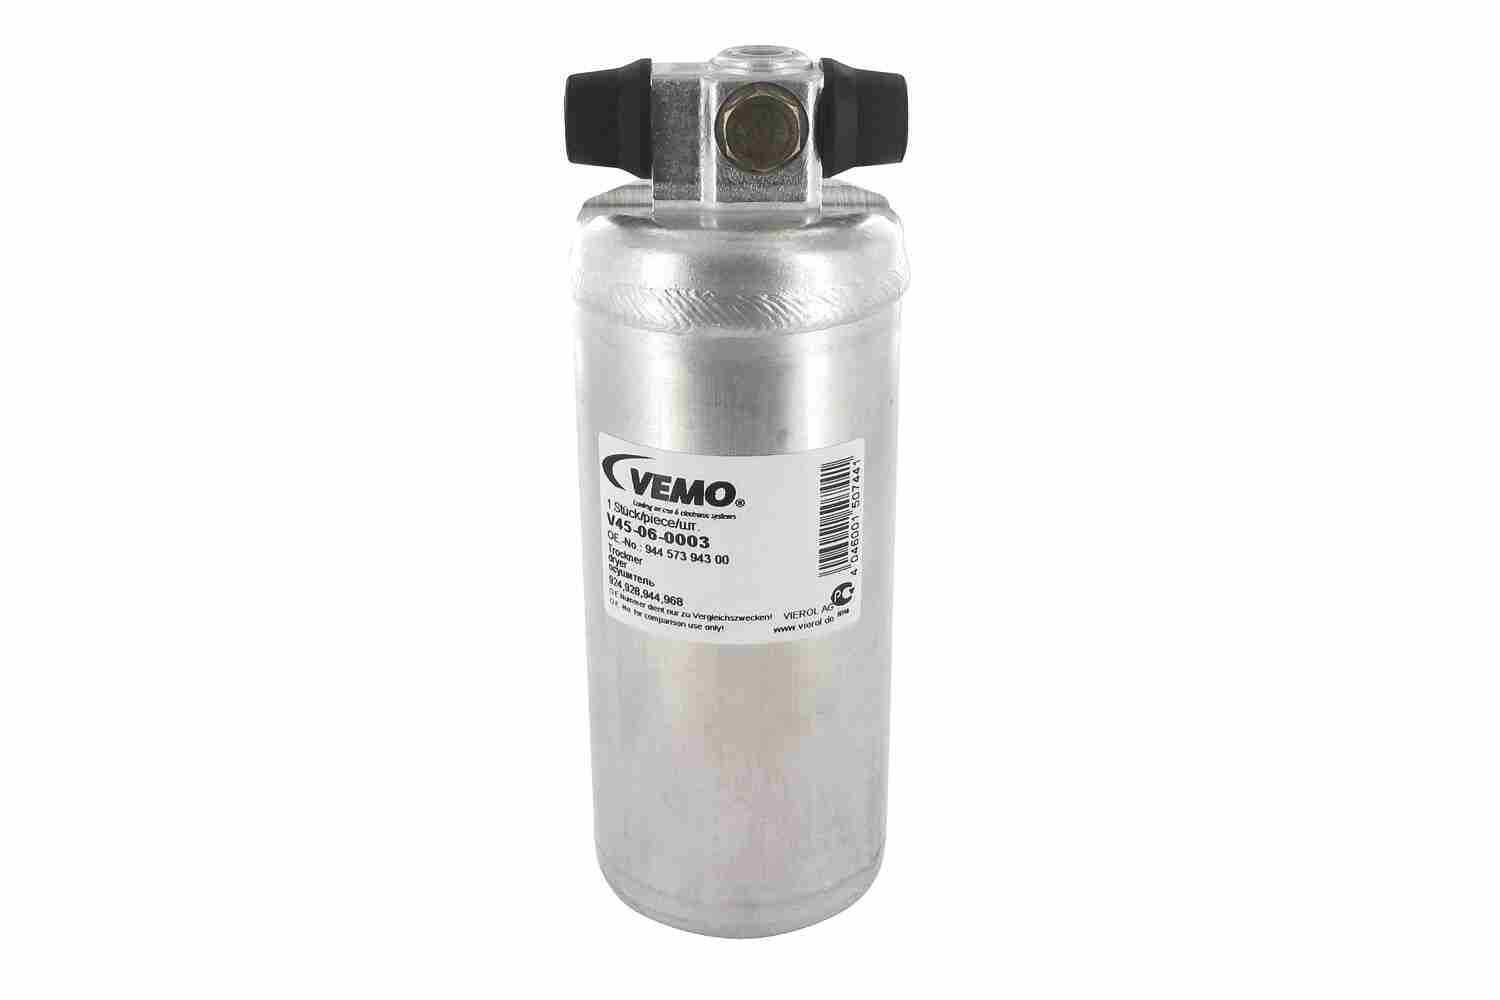 VEMO Original VEMO Quality Receiver drier V45-06-0003 buy